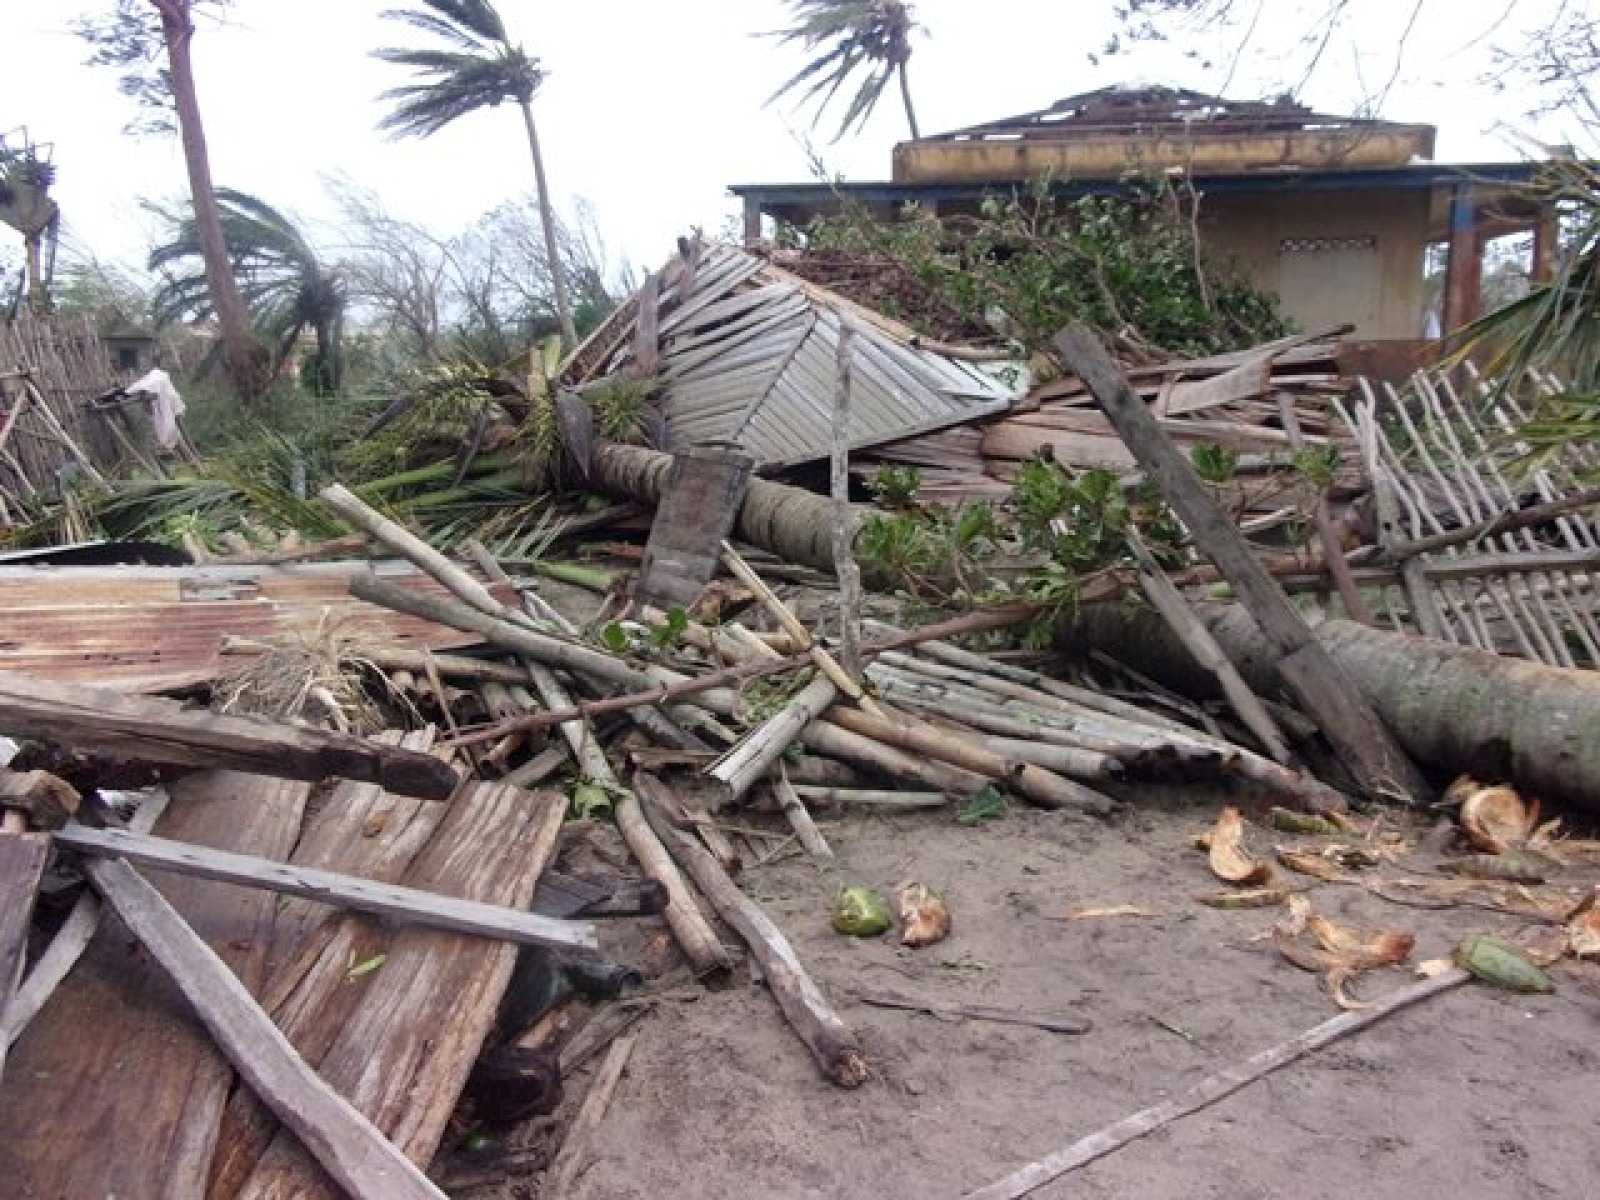 Damage after cyclone Batsirai in Mananjary. ©A.FANANTENANA/HI